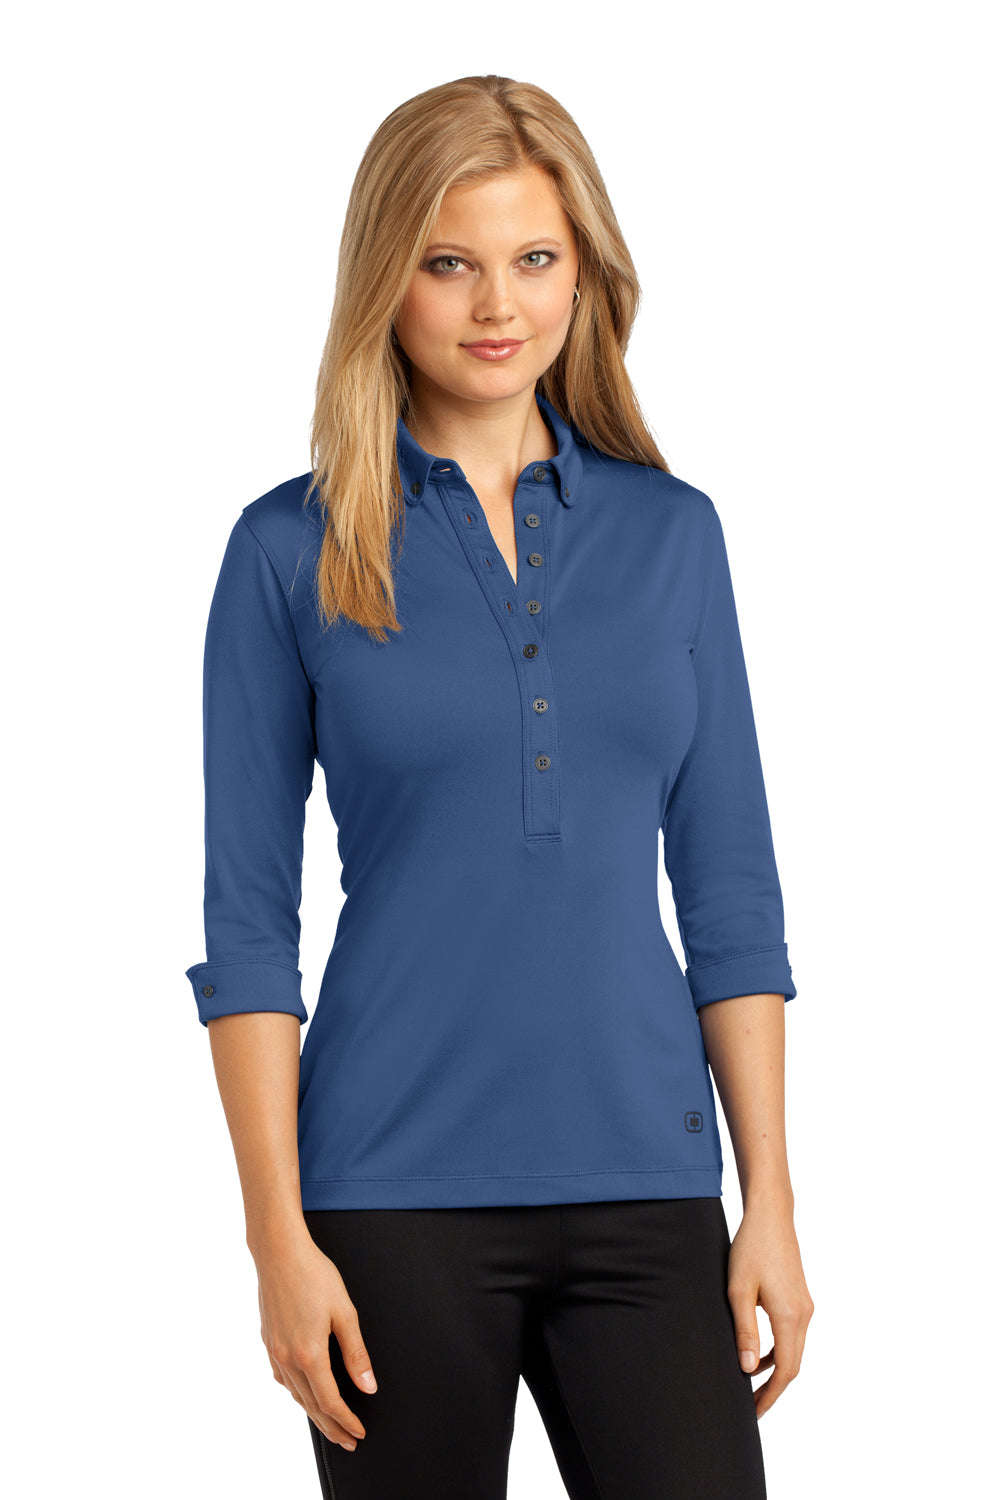 Ogio LOG122 Womens Gauge Moisture Wicking 3/4 Sleeve Polo Shirt Indigo Blue Front